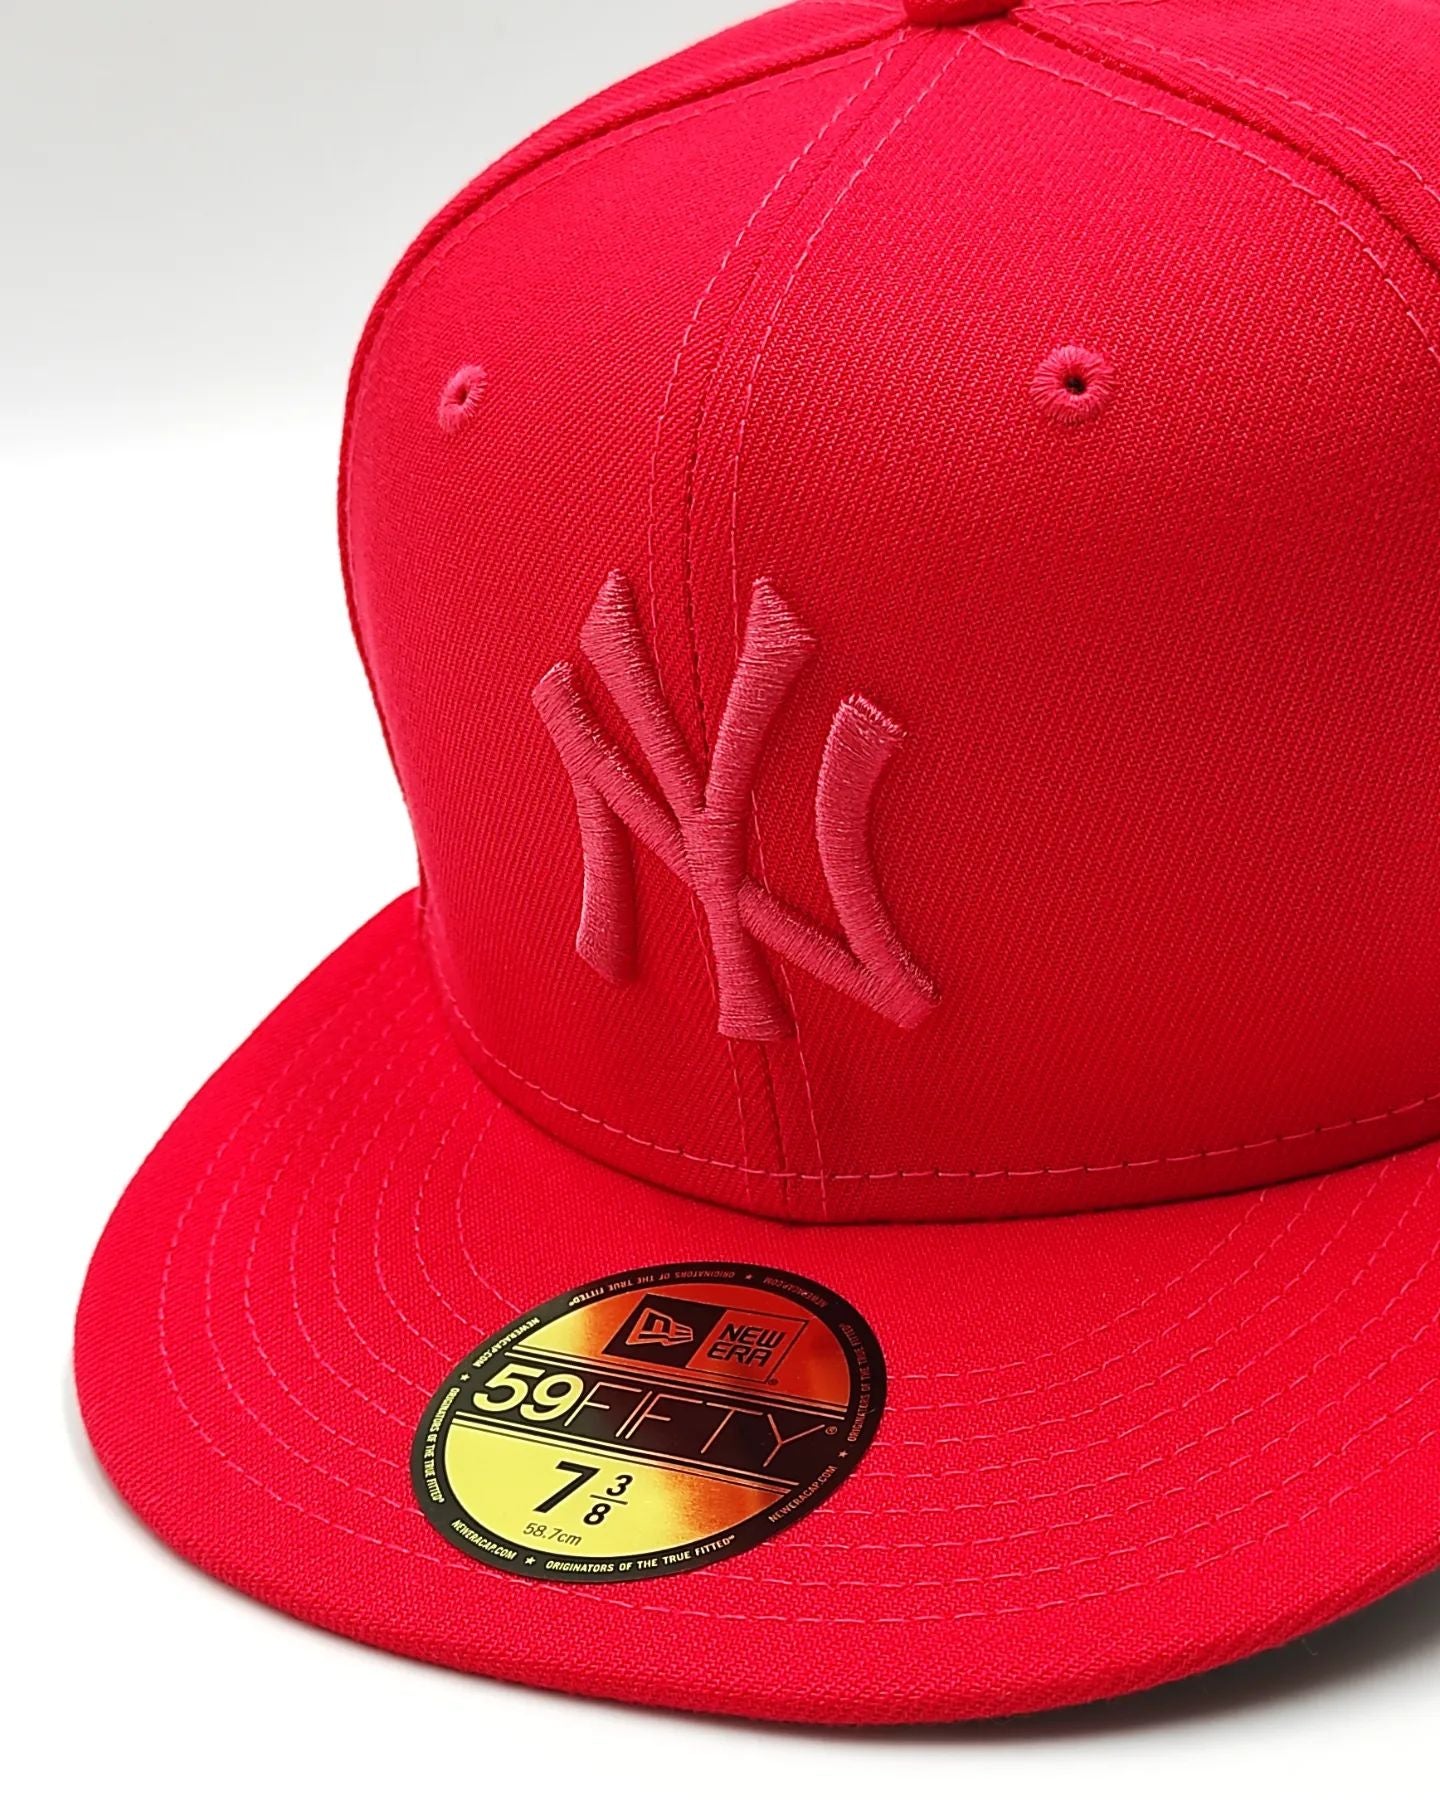 Gorra de New York Yankees 59Fifty Red